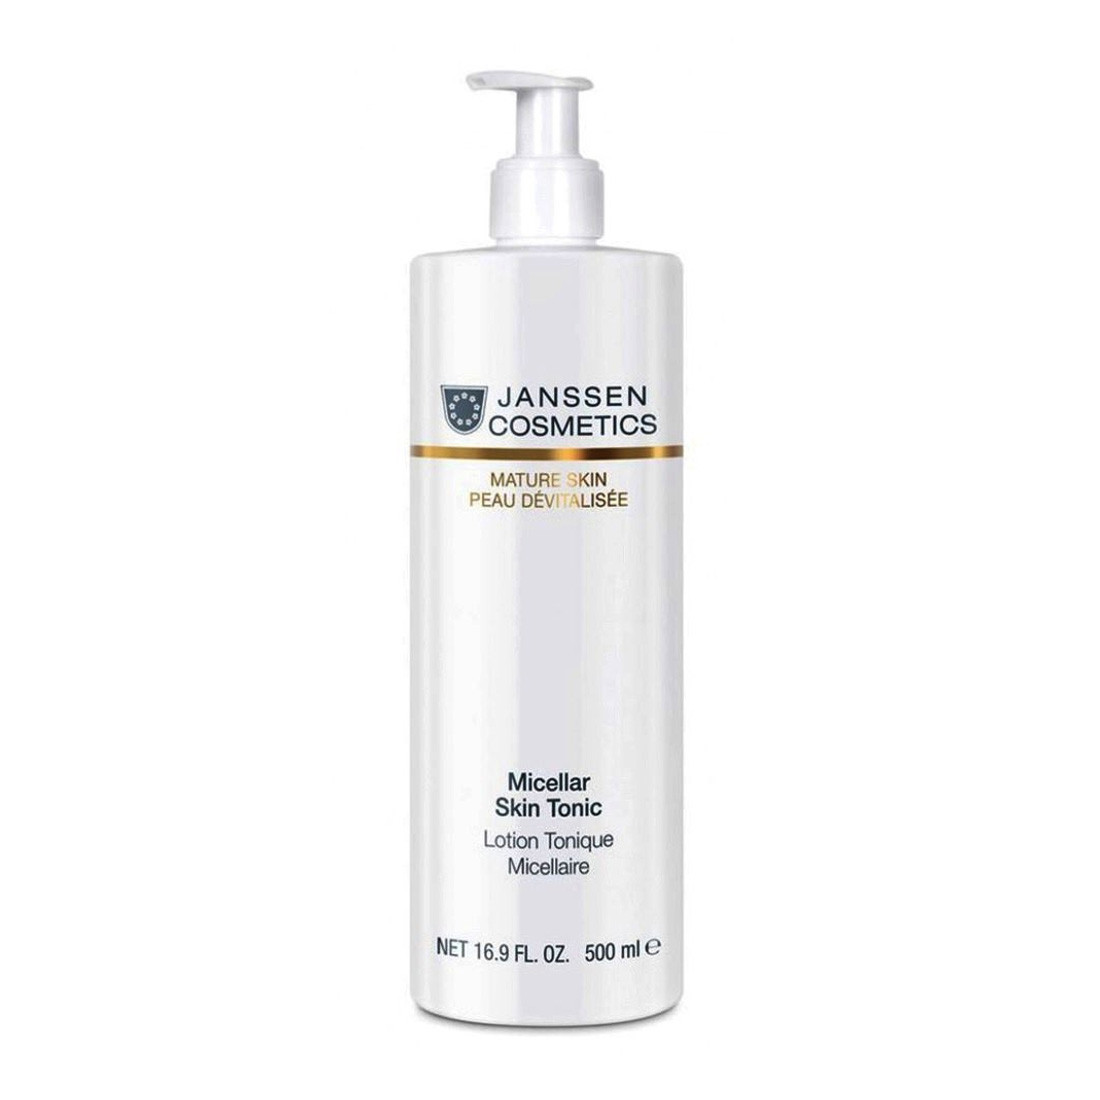 Мицеллярный тоник Janssen Cosmetics Micellar Skin Tonic